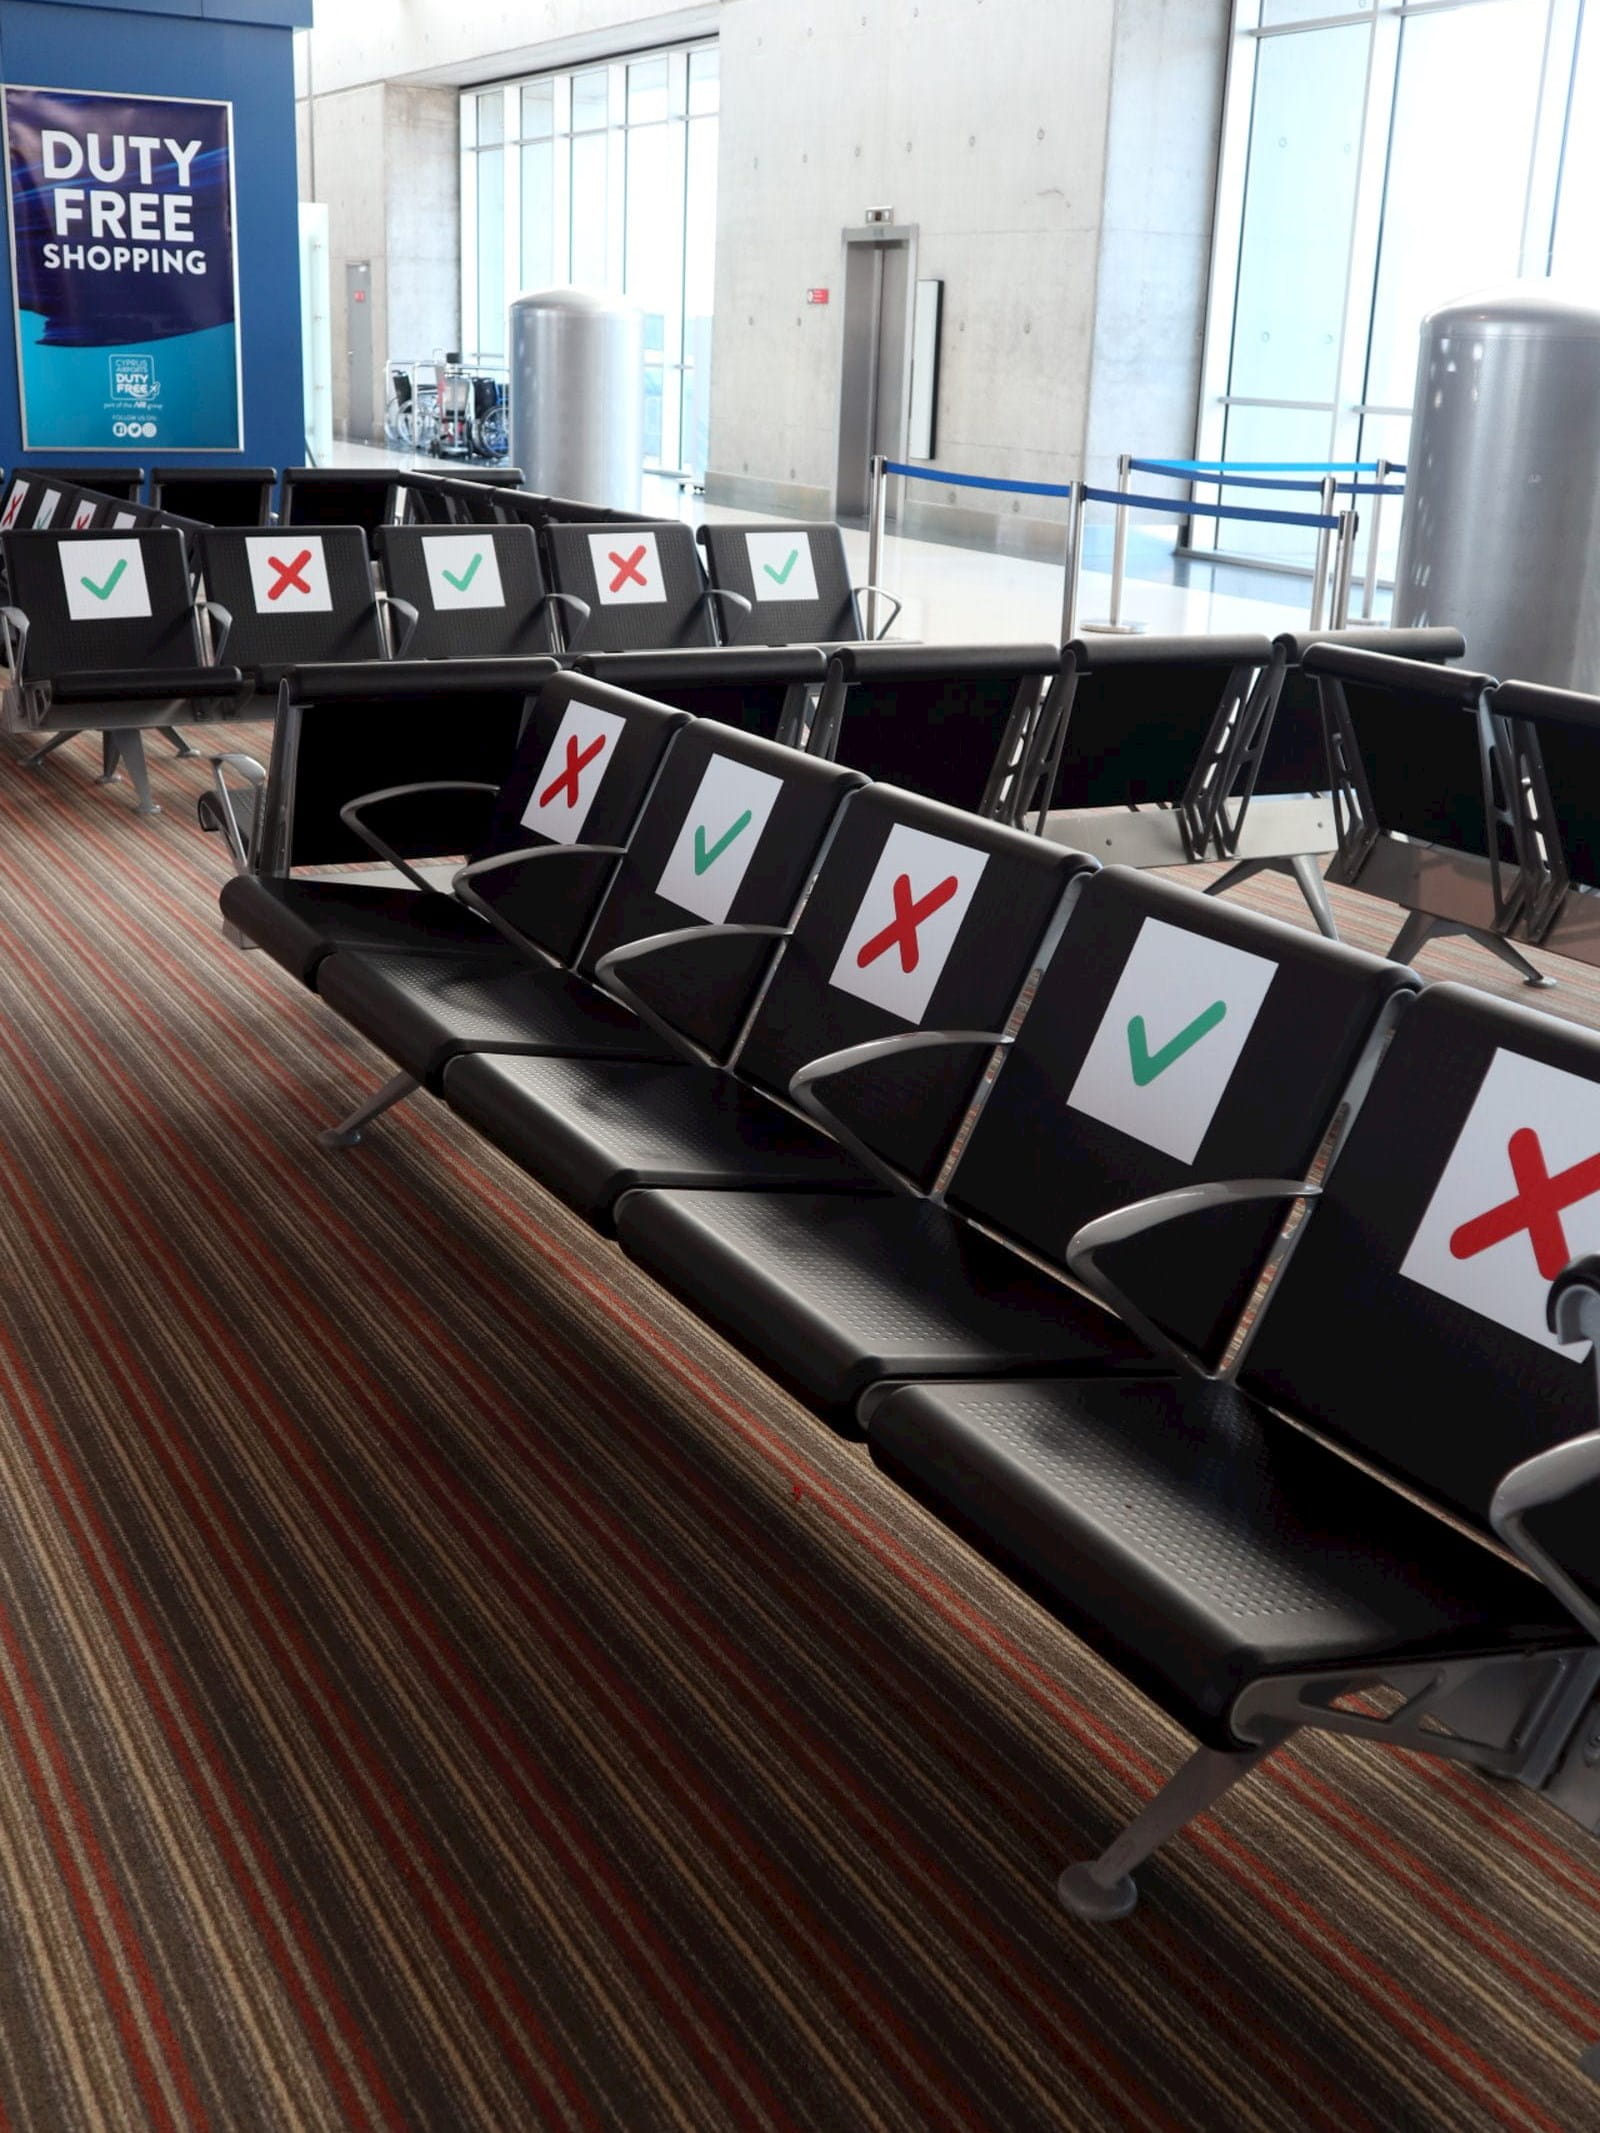 Hermes Airport Seats